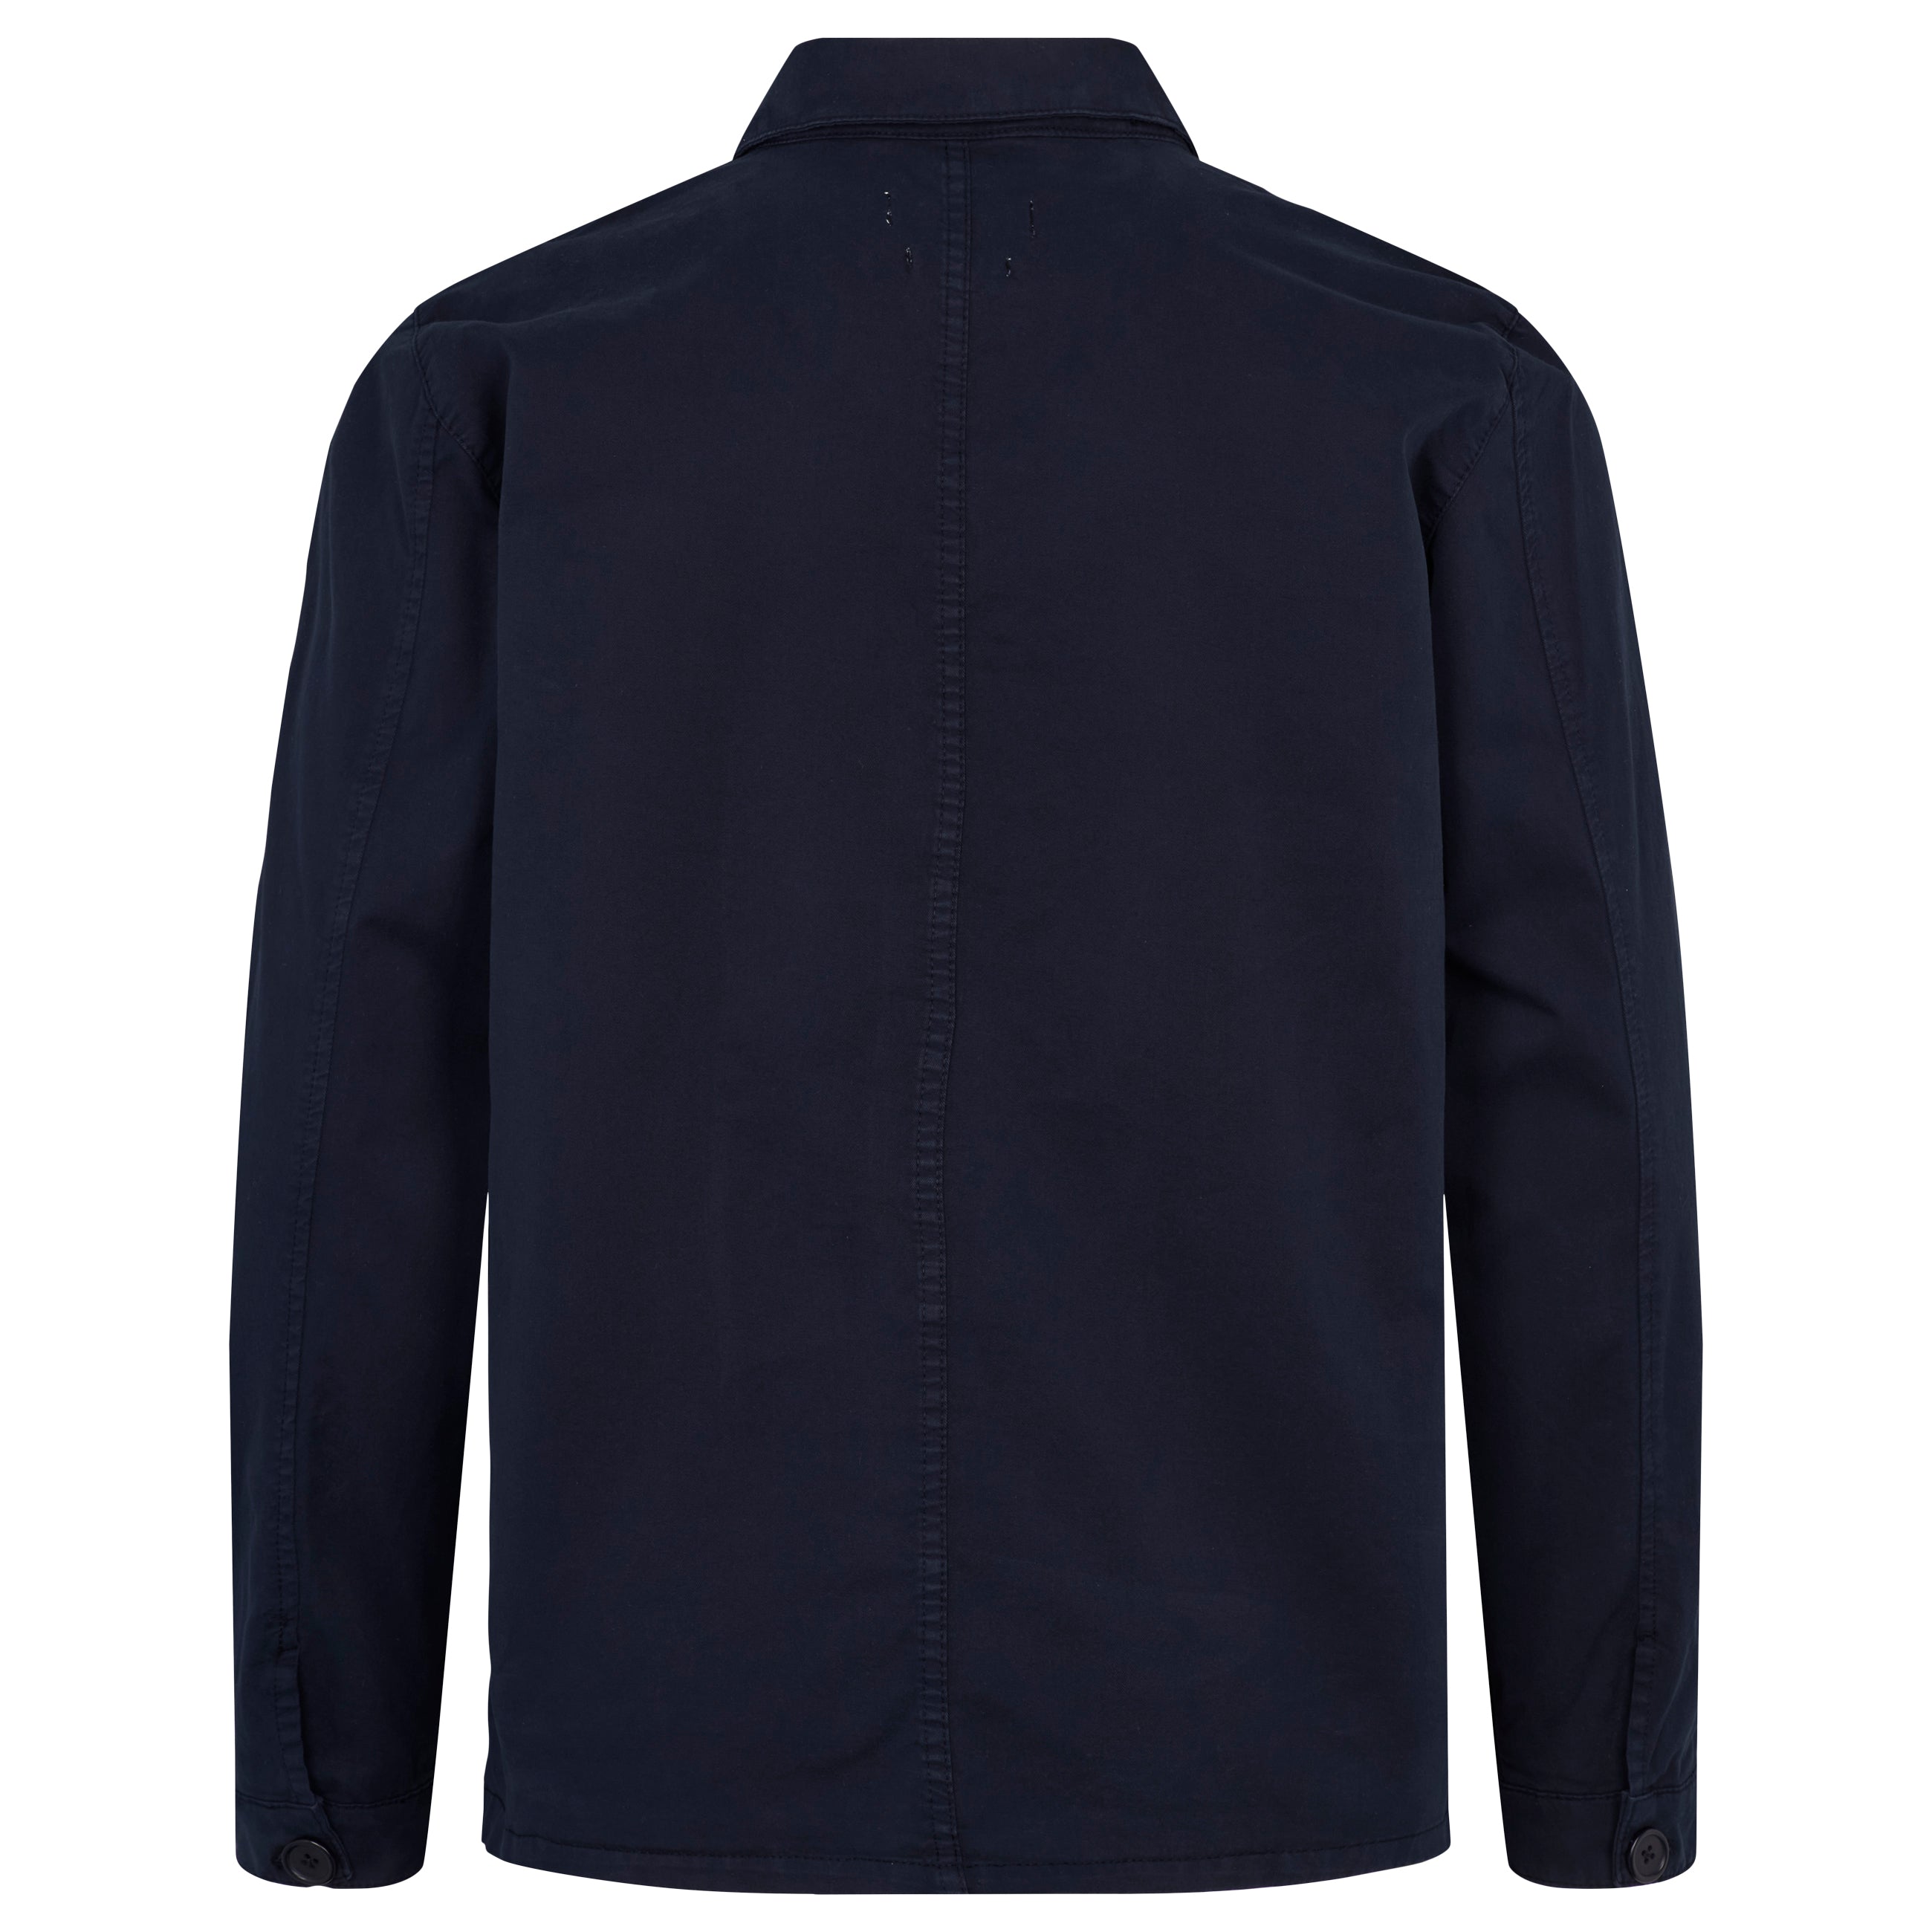 By Garment Makers The Organic Workwear Jacket GOTS jakke 3096 Navy Blazer